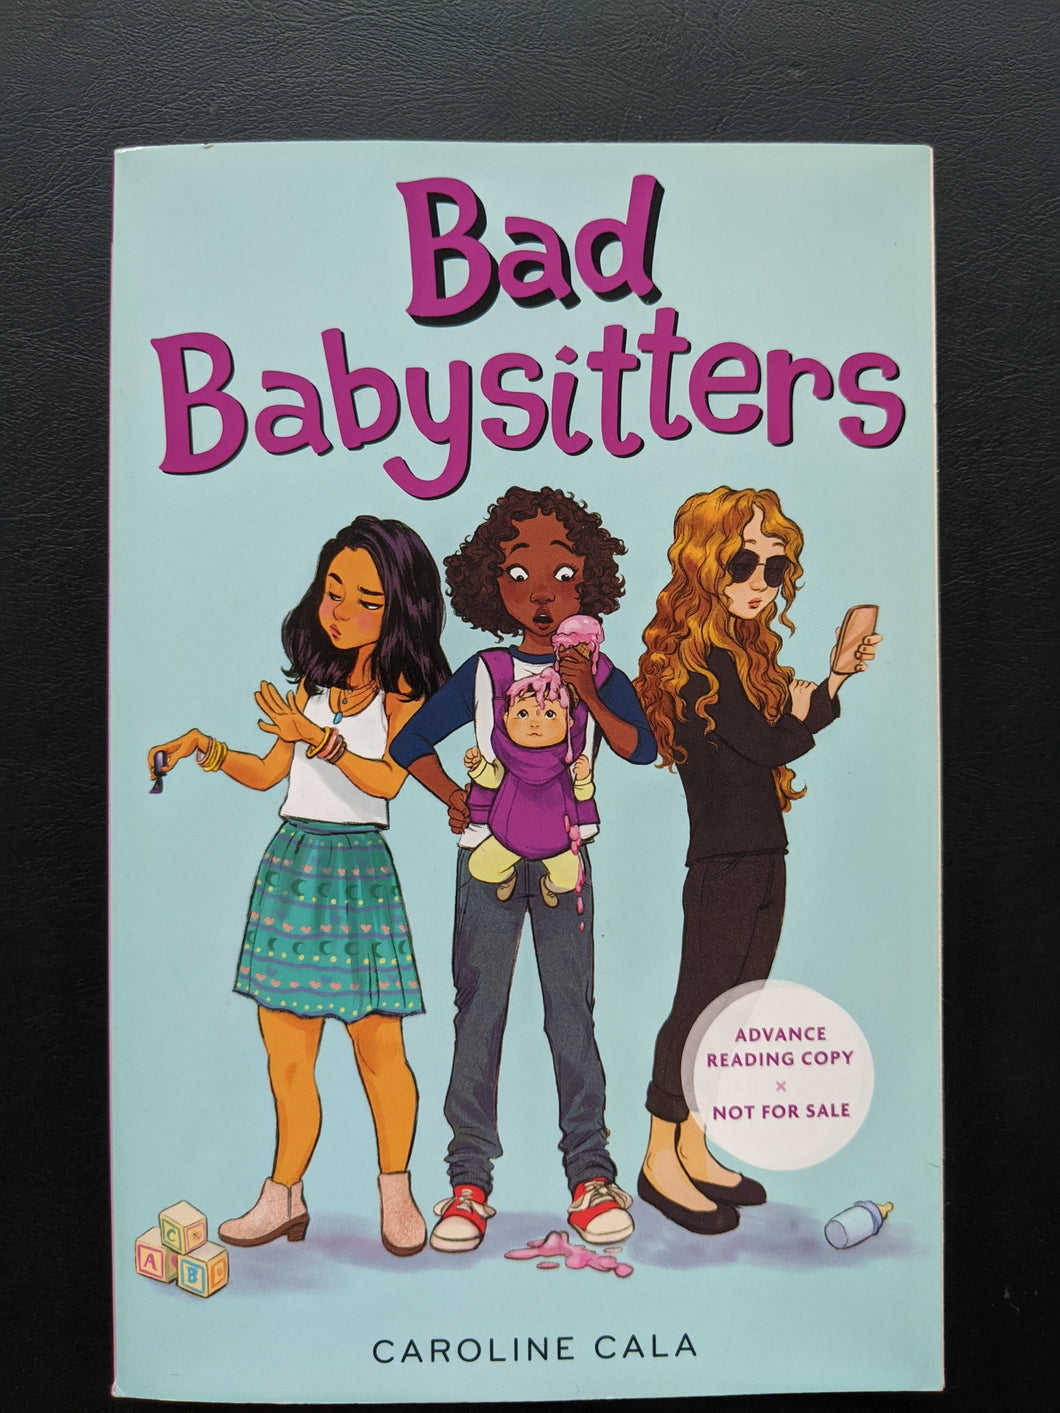 Bad Babysitters by Caroline Cala